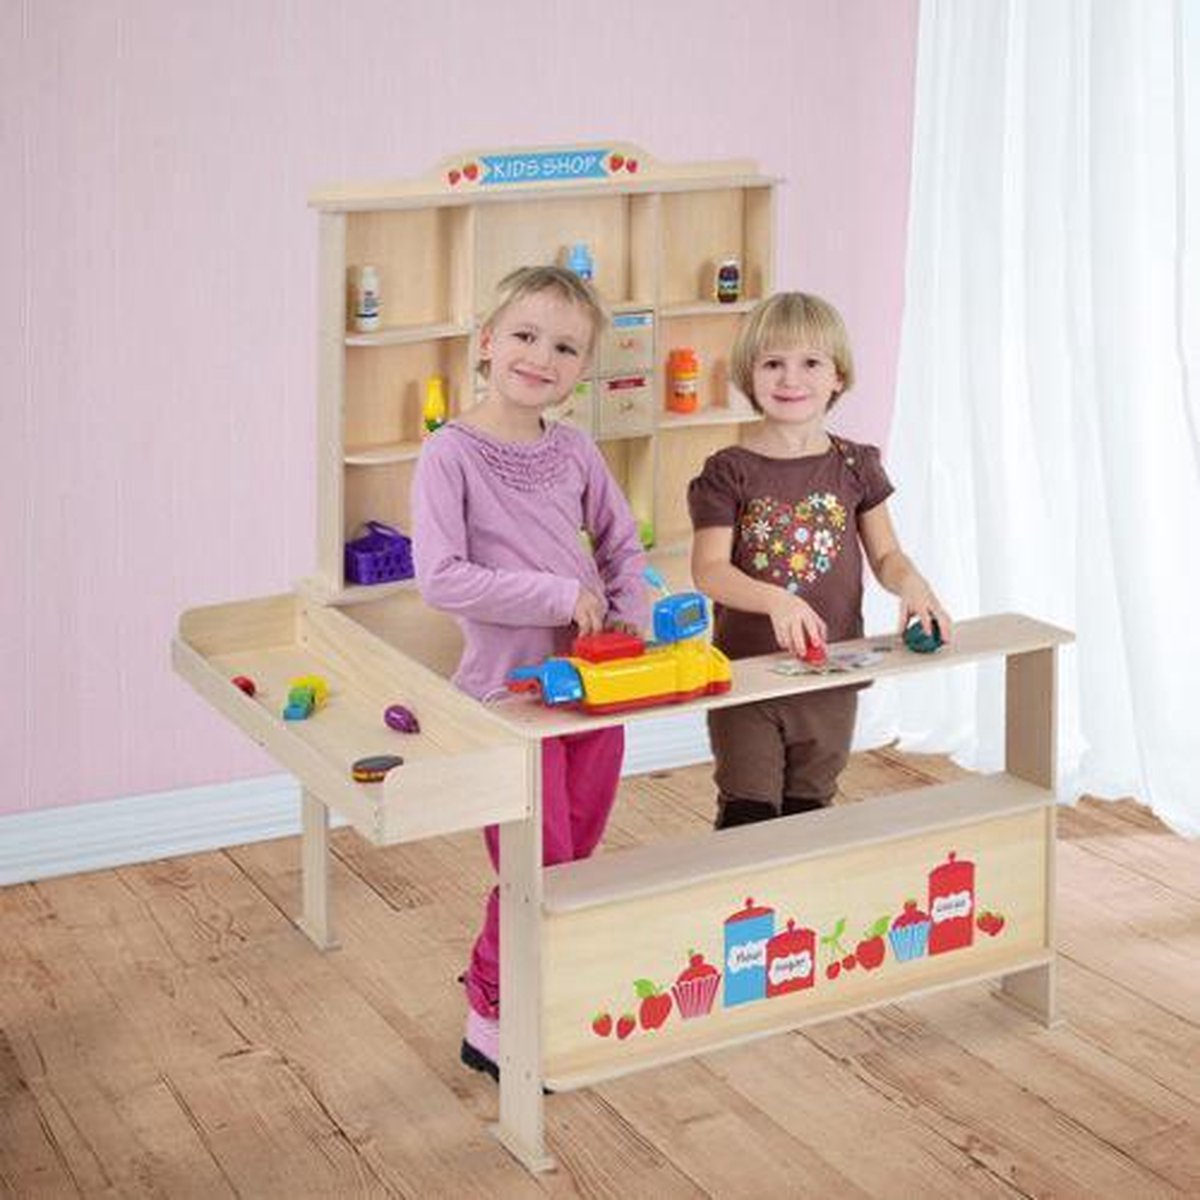 Kinderwinkeltje, houten speelwinkel, supermarkt, marktkraam,  speelgoedwinkel | bol.com